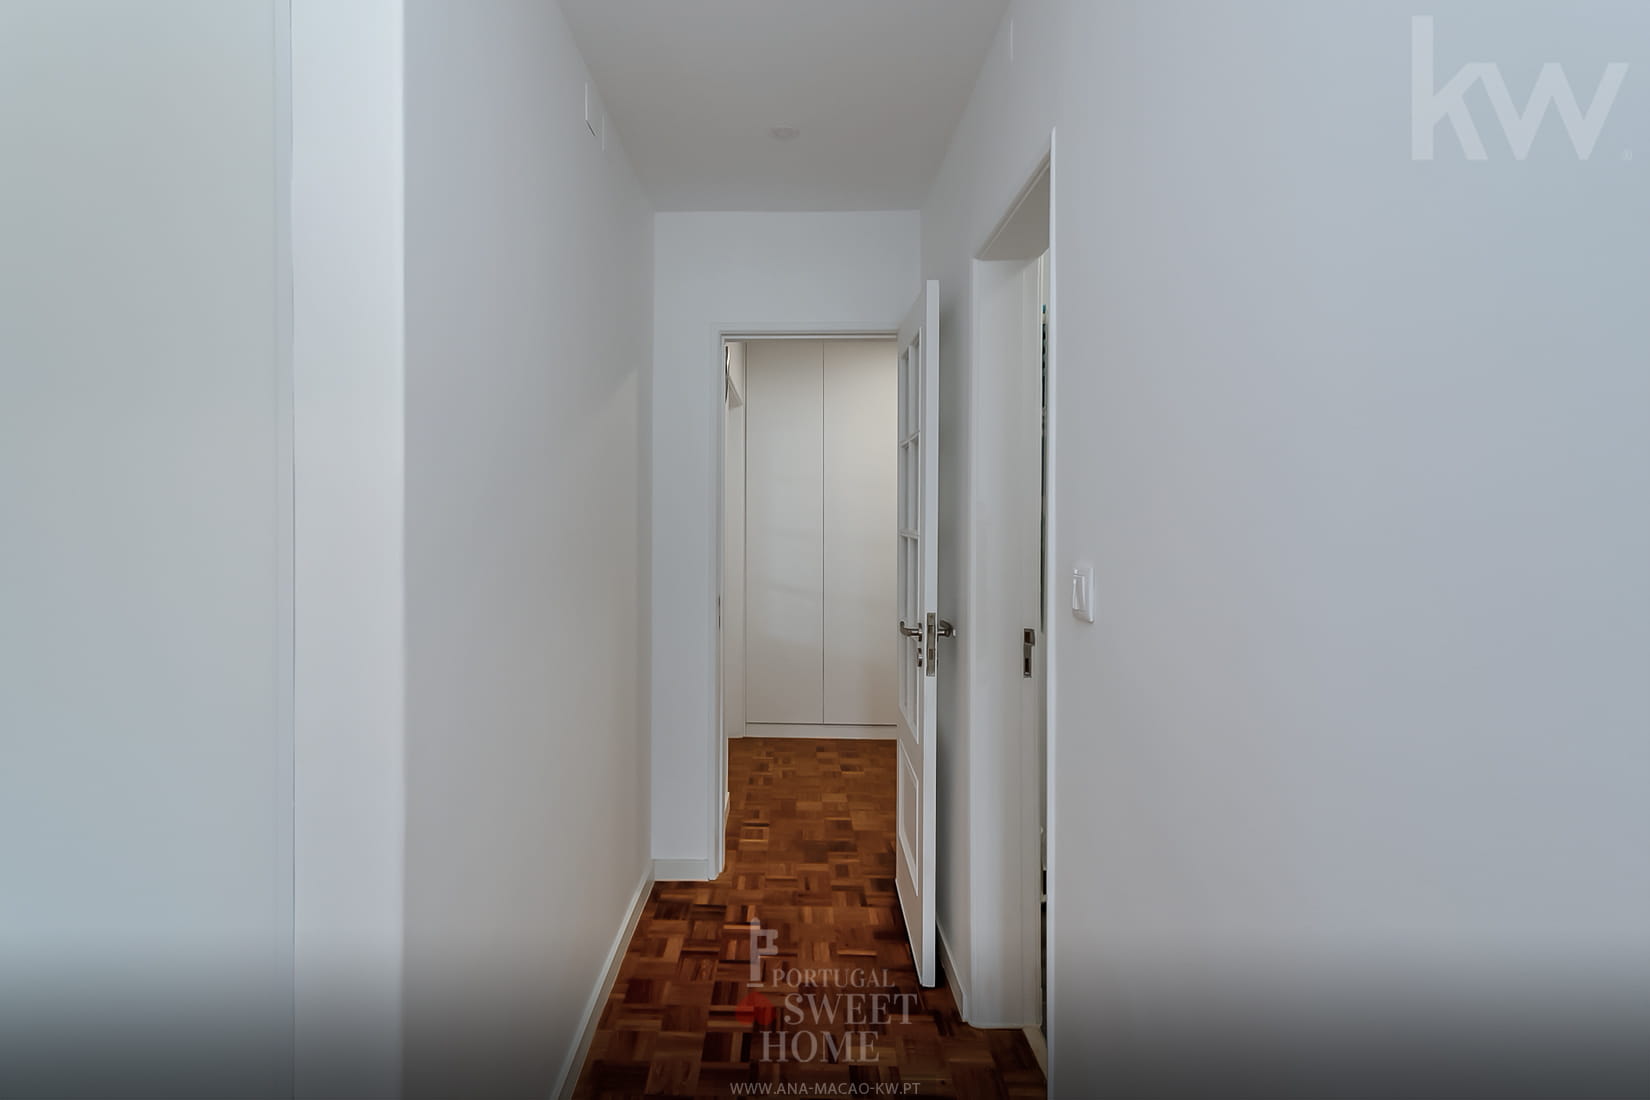 Hallway and bedroom area